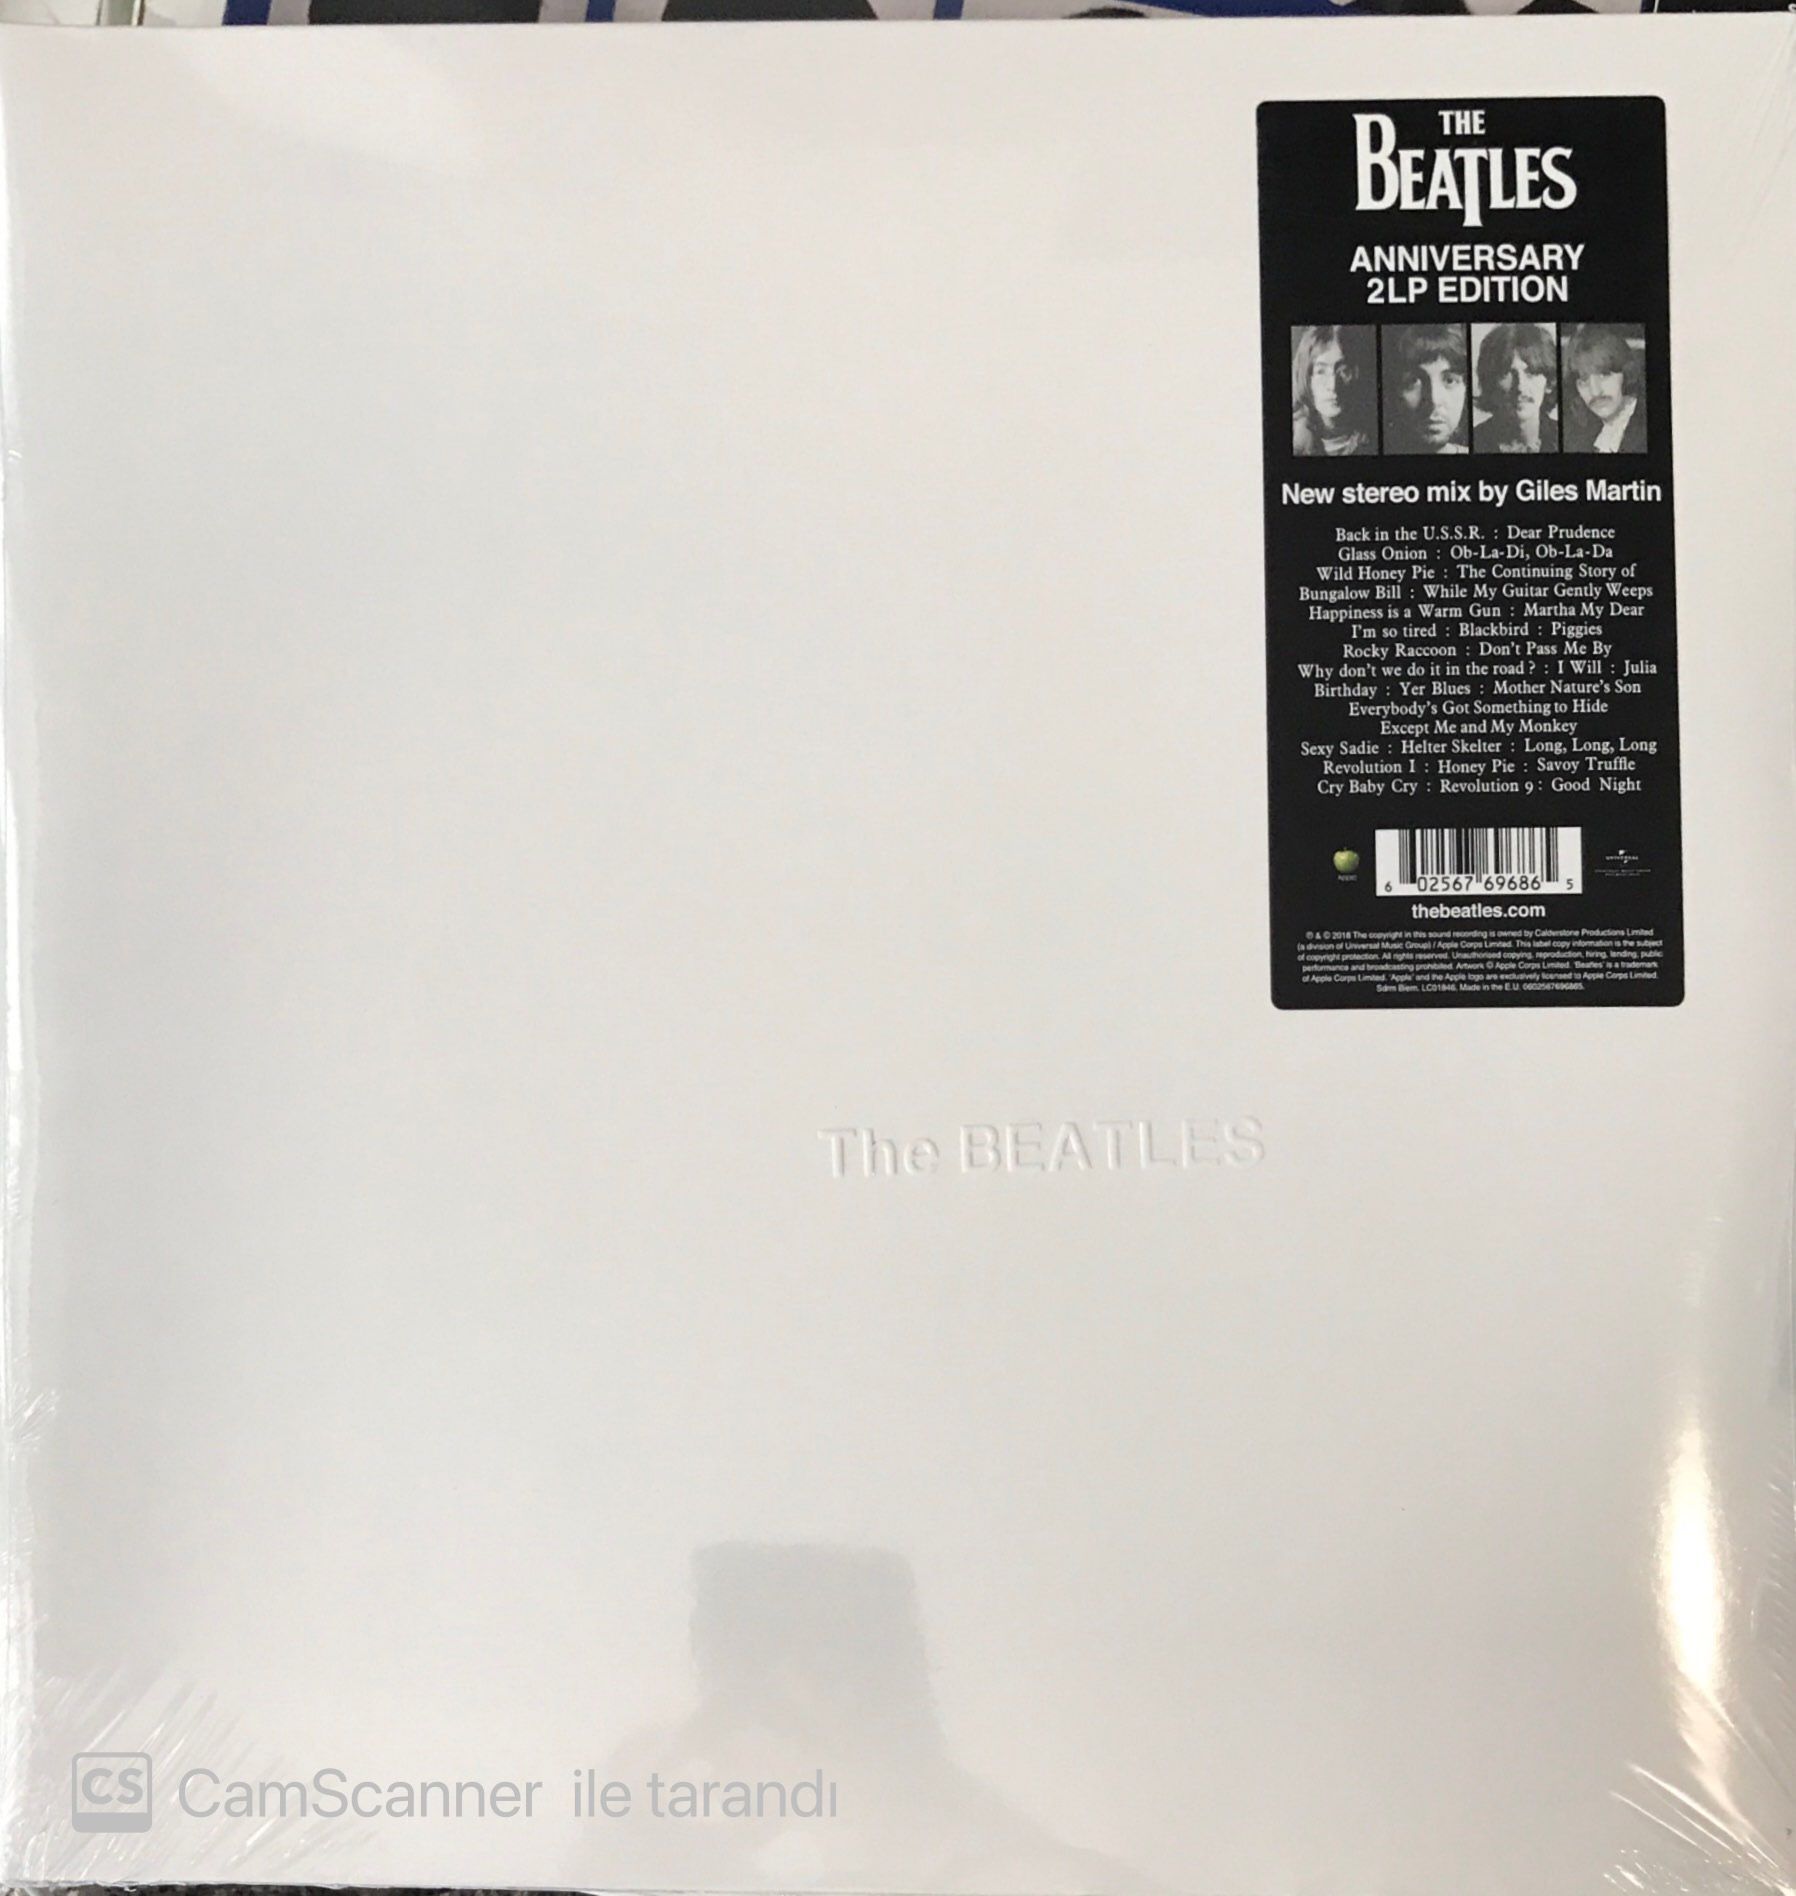 The Beatles - The White Album Double LP